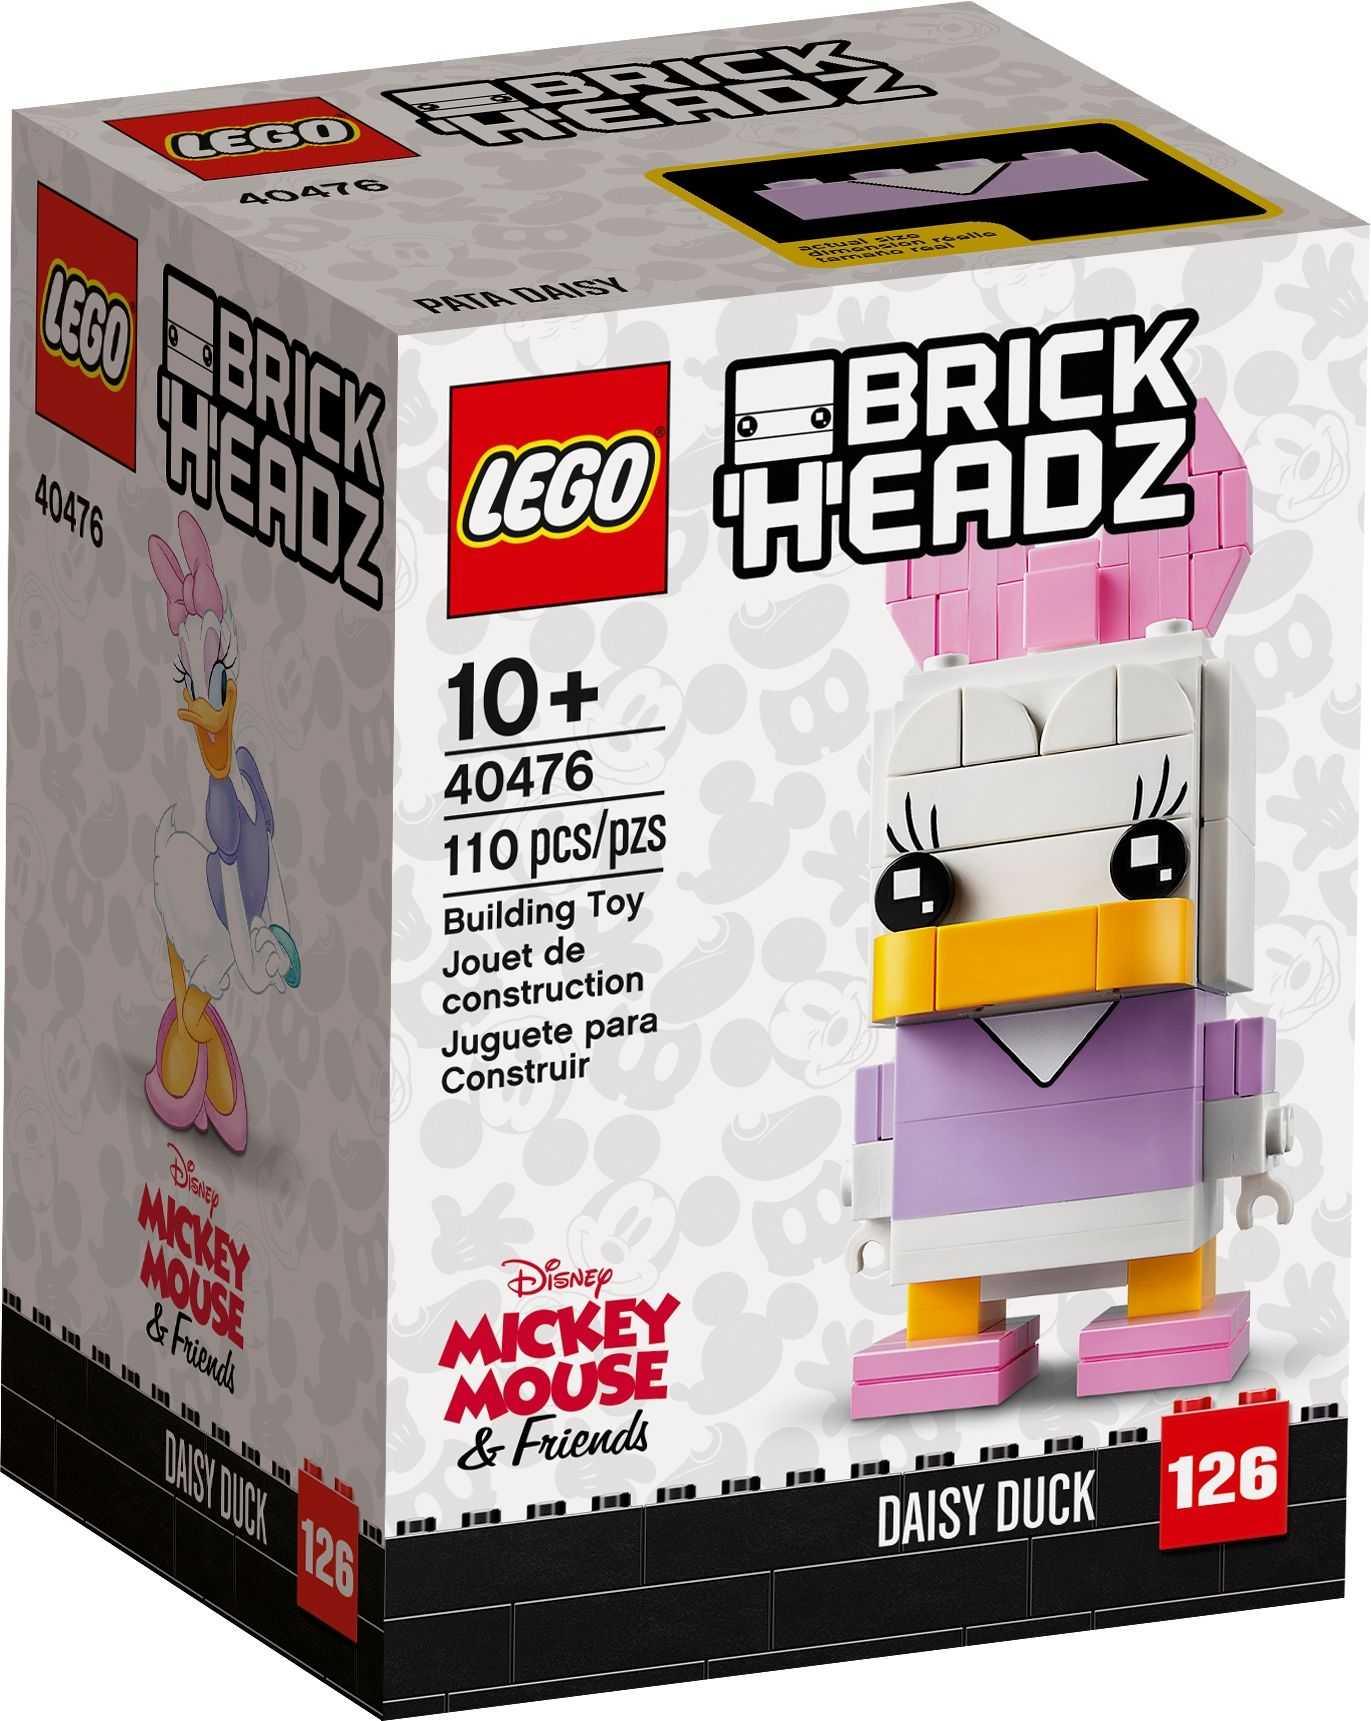 LEGO® BrickHeadz 40476 Daisy Duck - Peer Online Shop